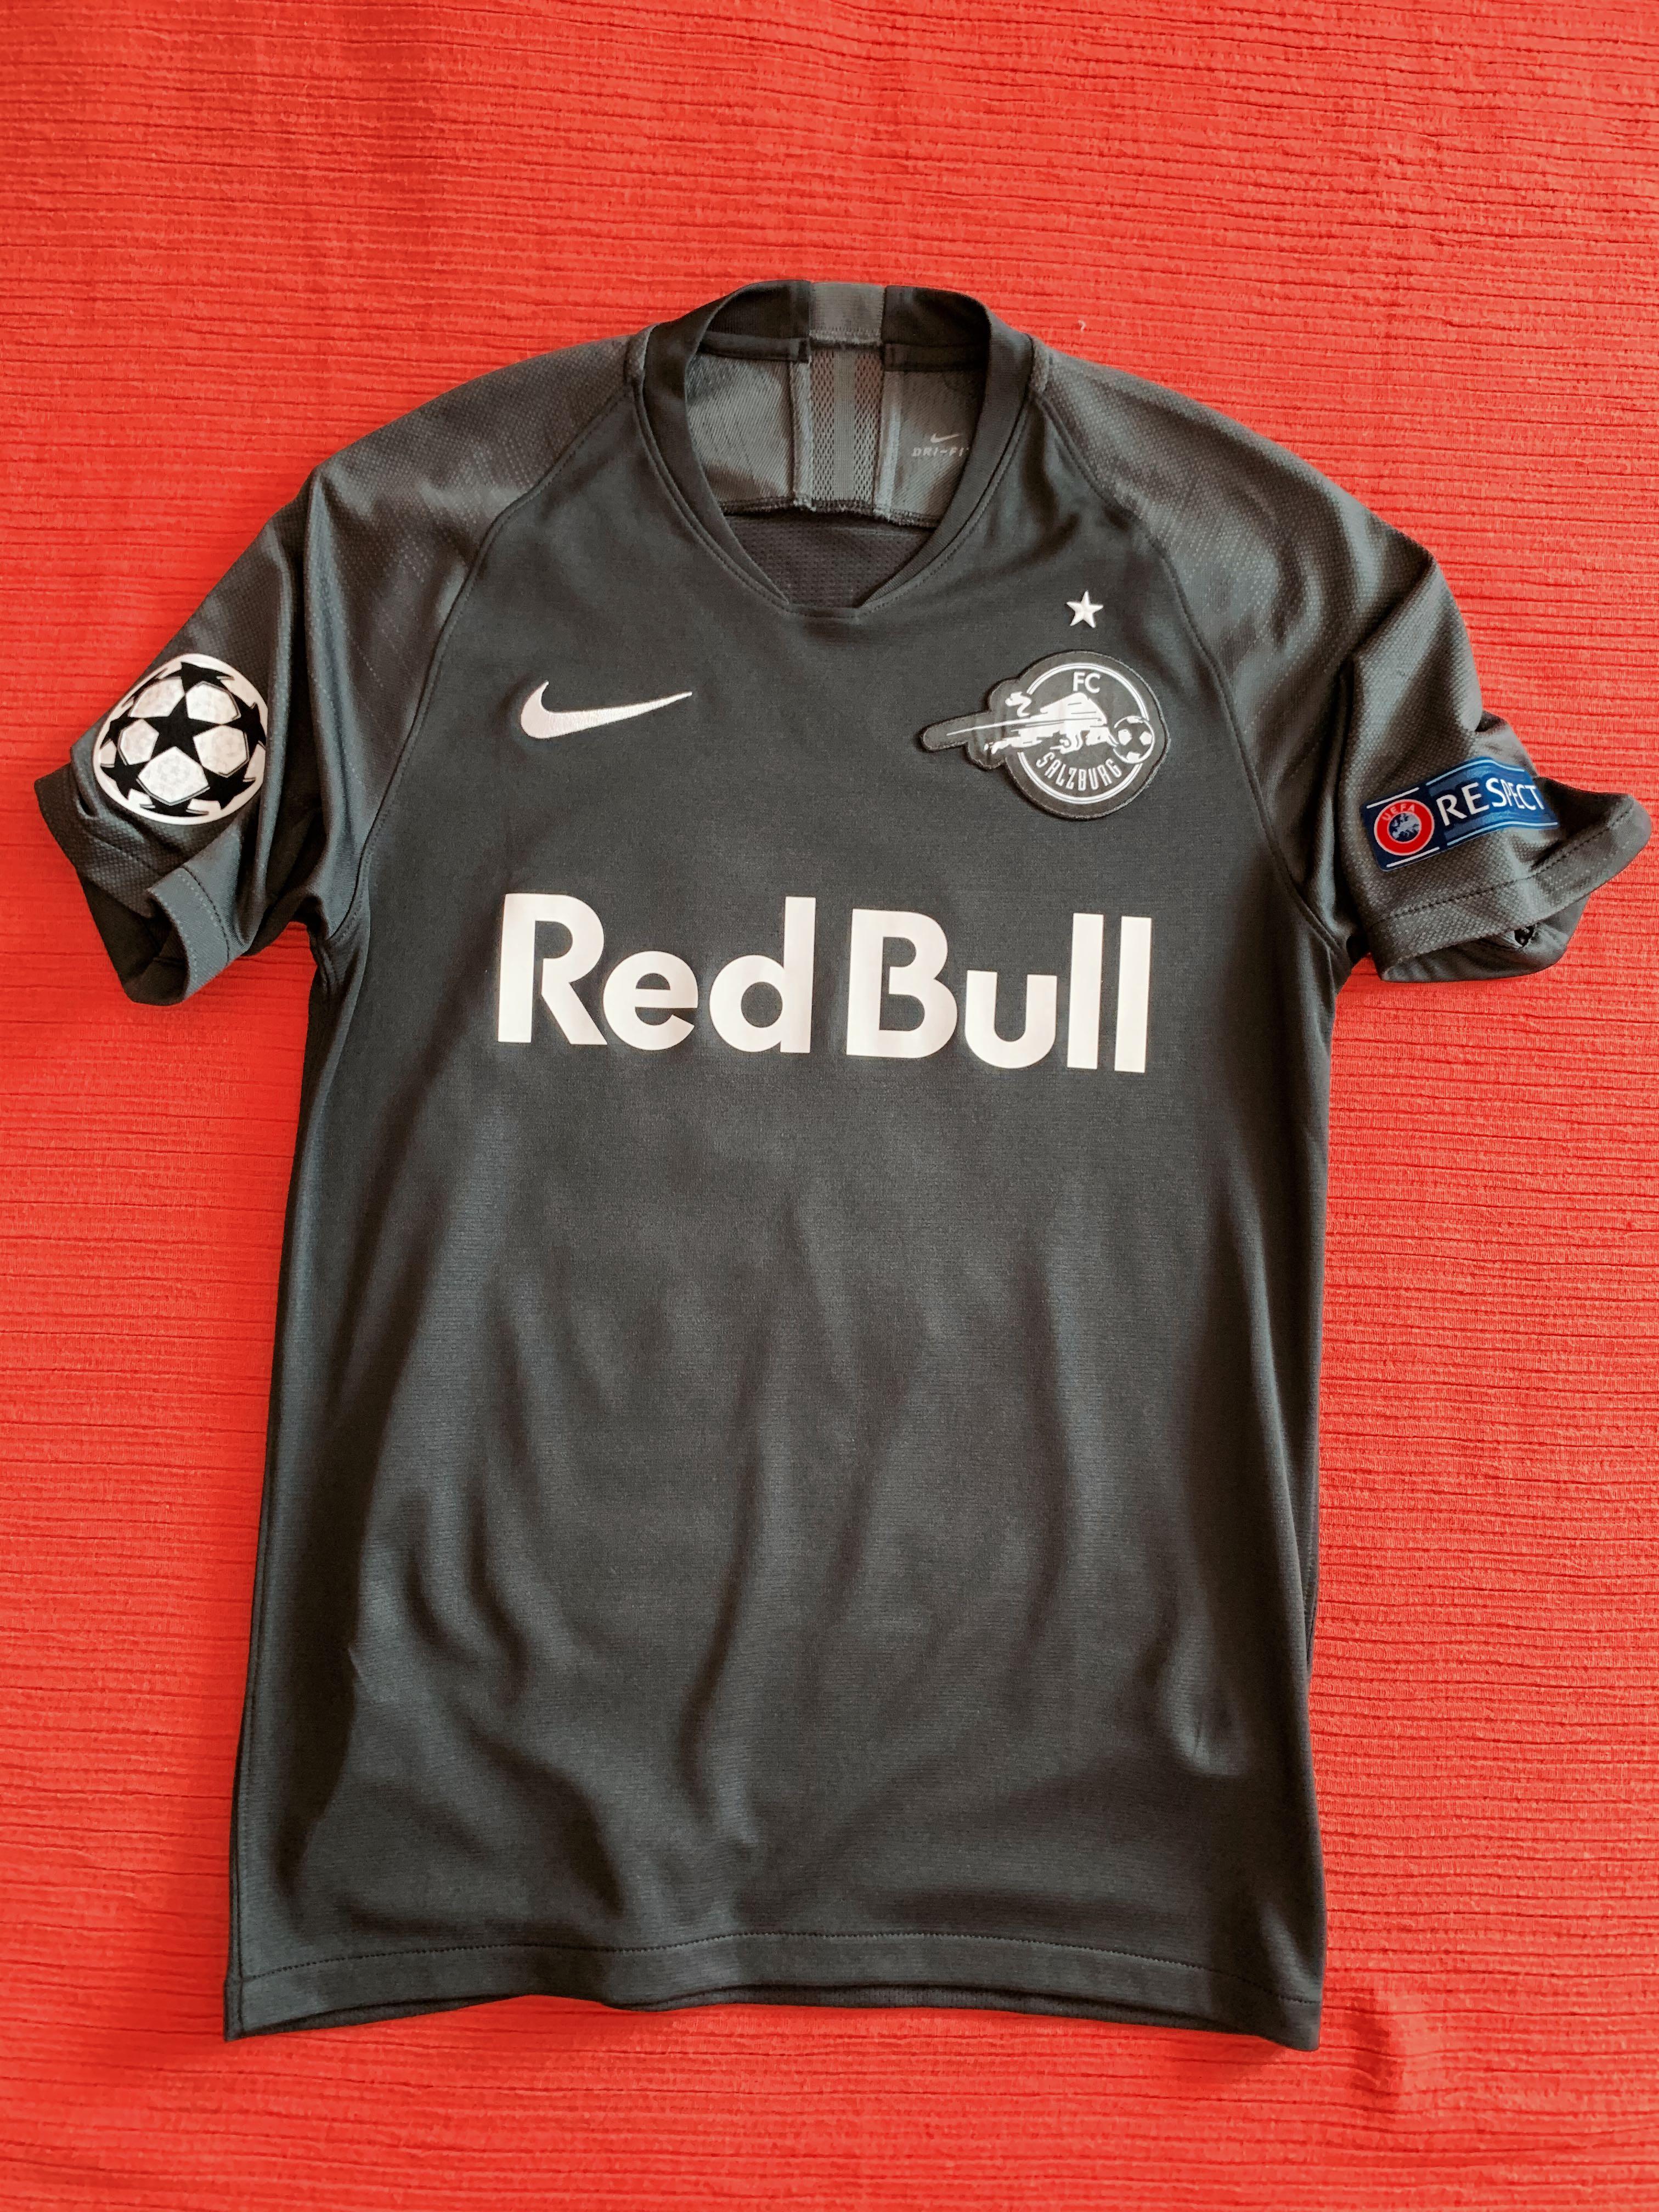 Stunning Black/Gold Nike Red Bull Salzburg 2023 Champions Kit Released -  Unfair Price? - Footy Headlines